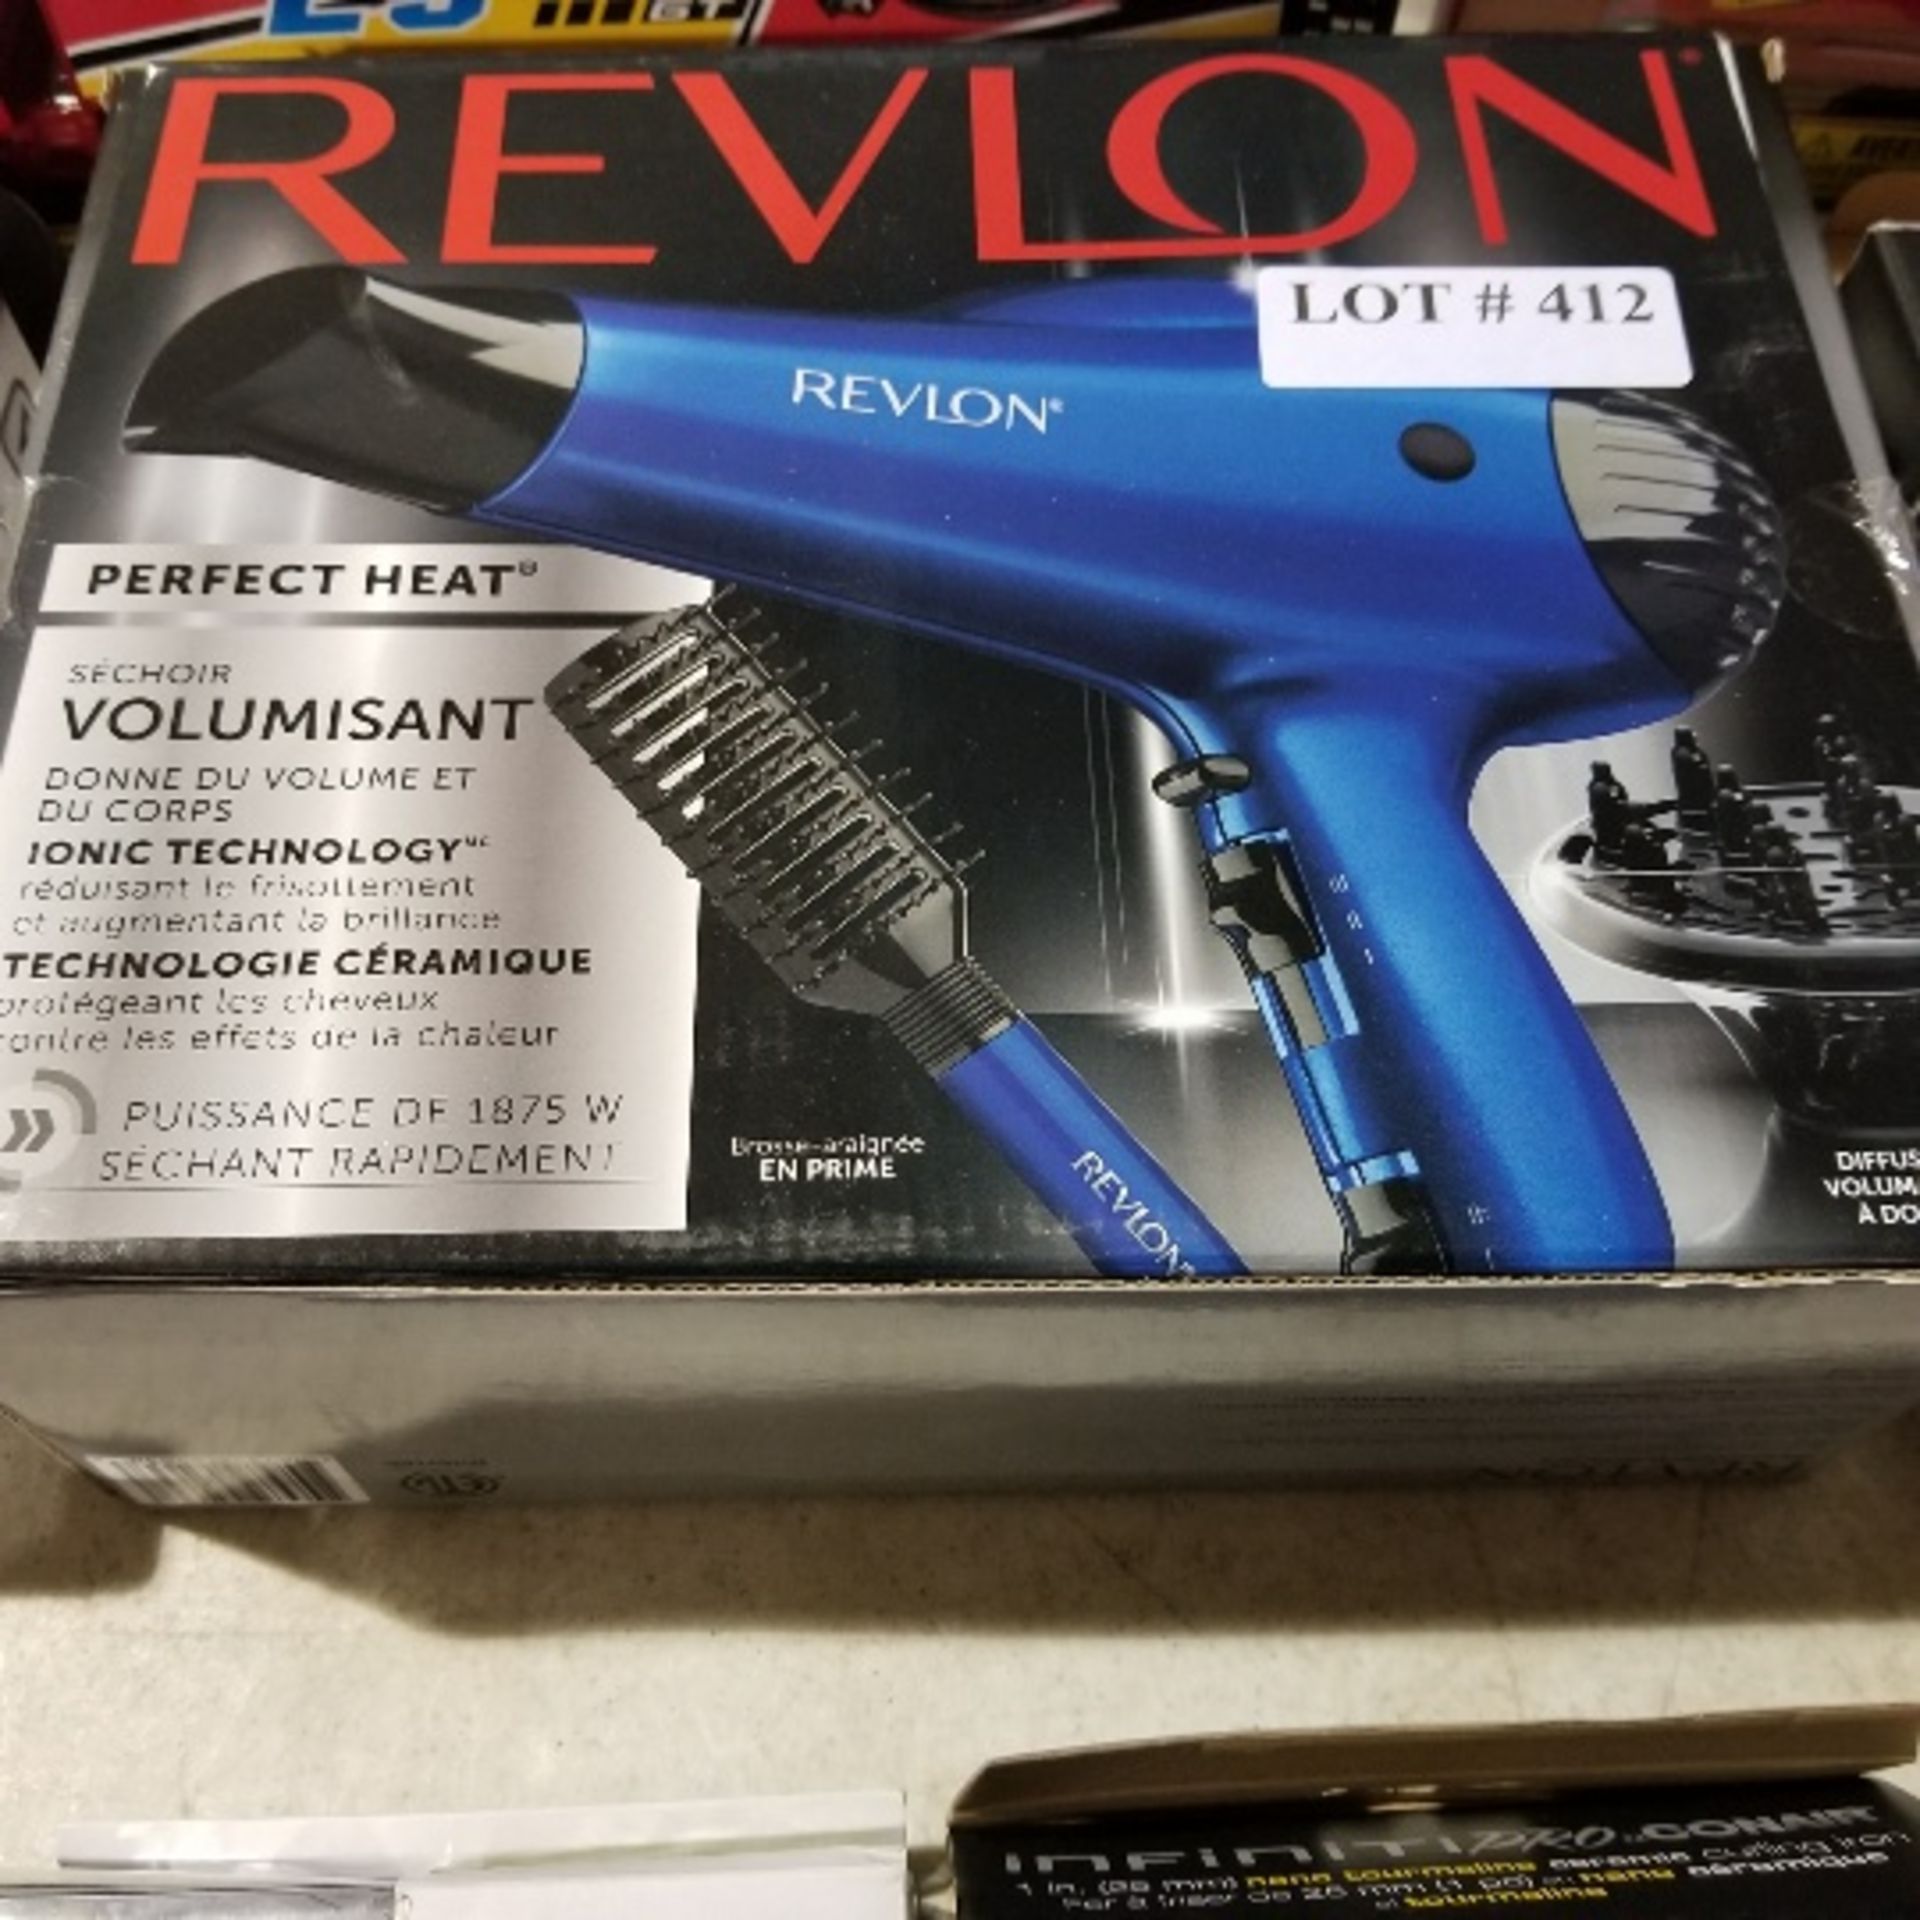 Revlon blow dryer